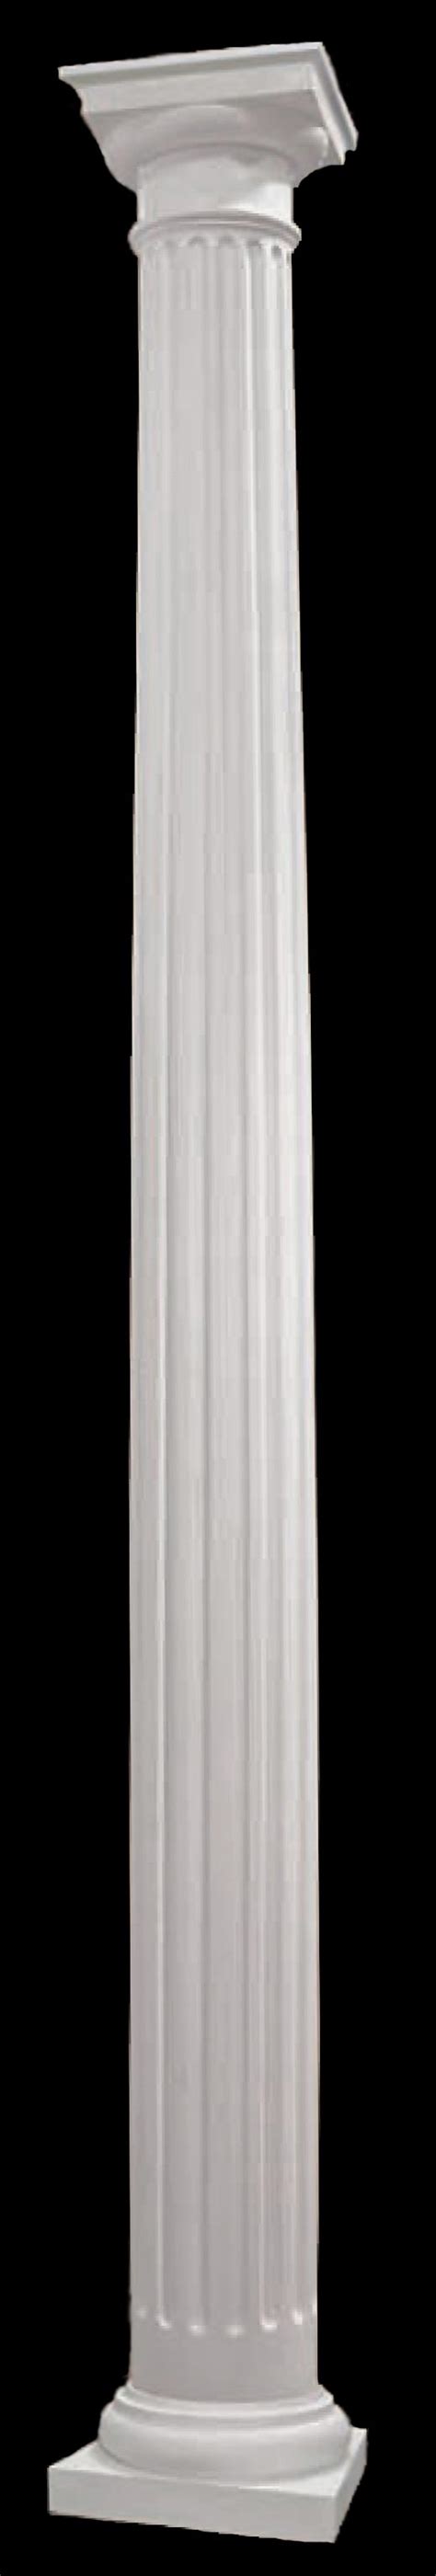 Fiberglass Composite Frp Tuscan Architectural Columns Load Bearing